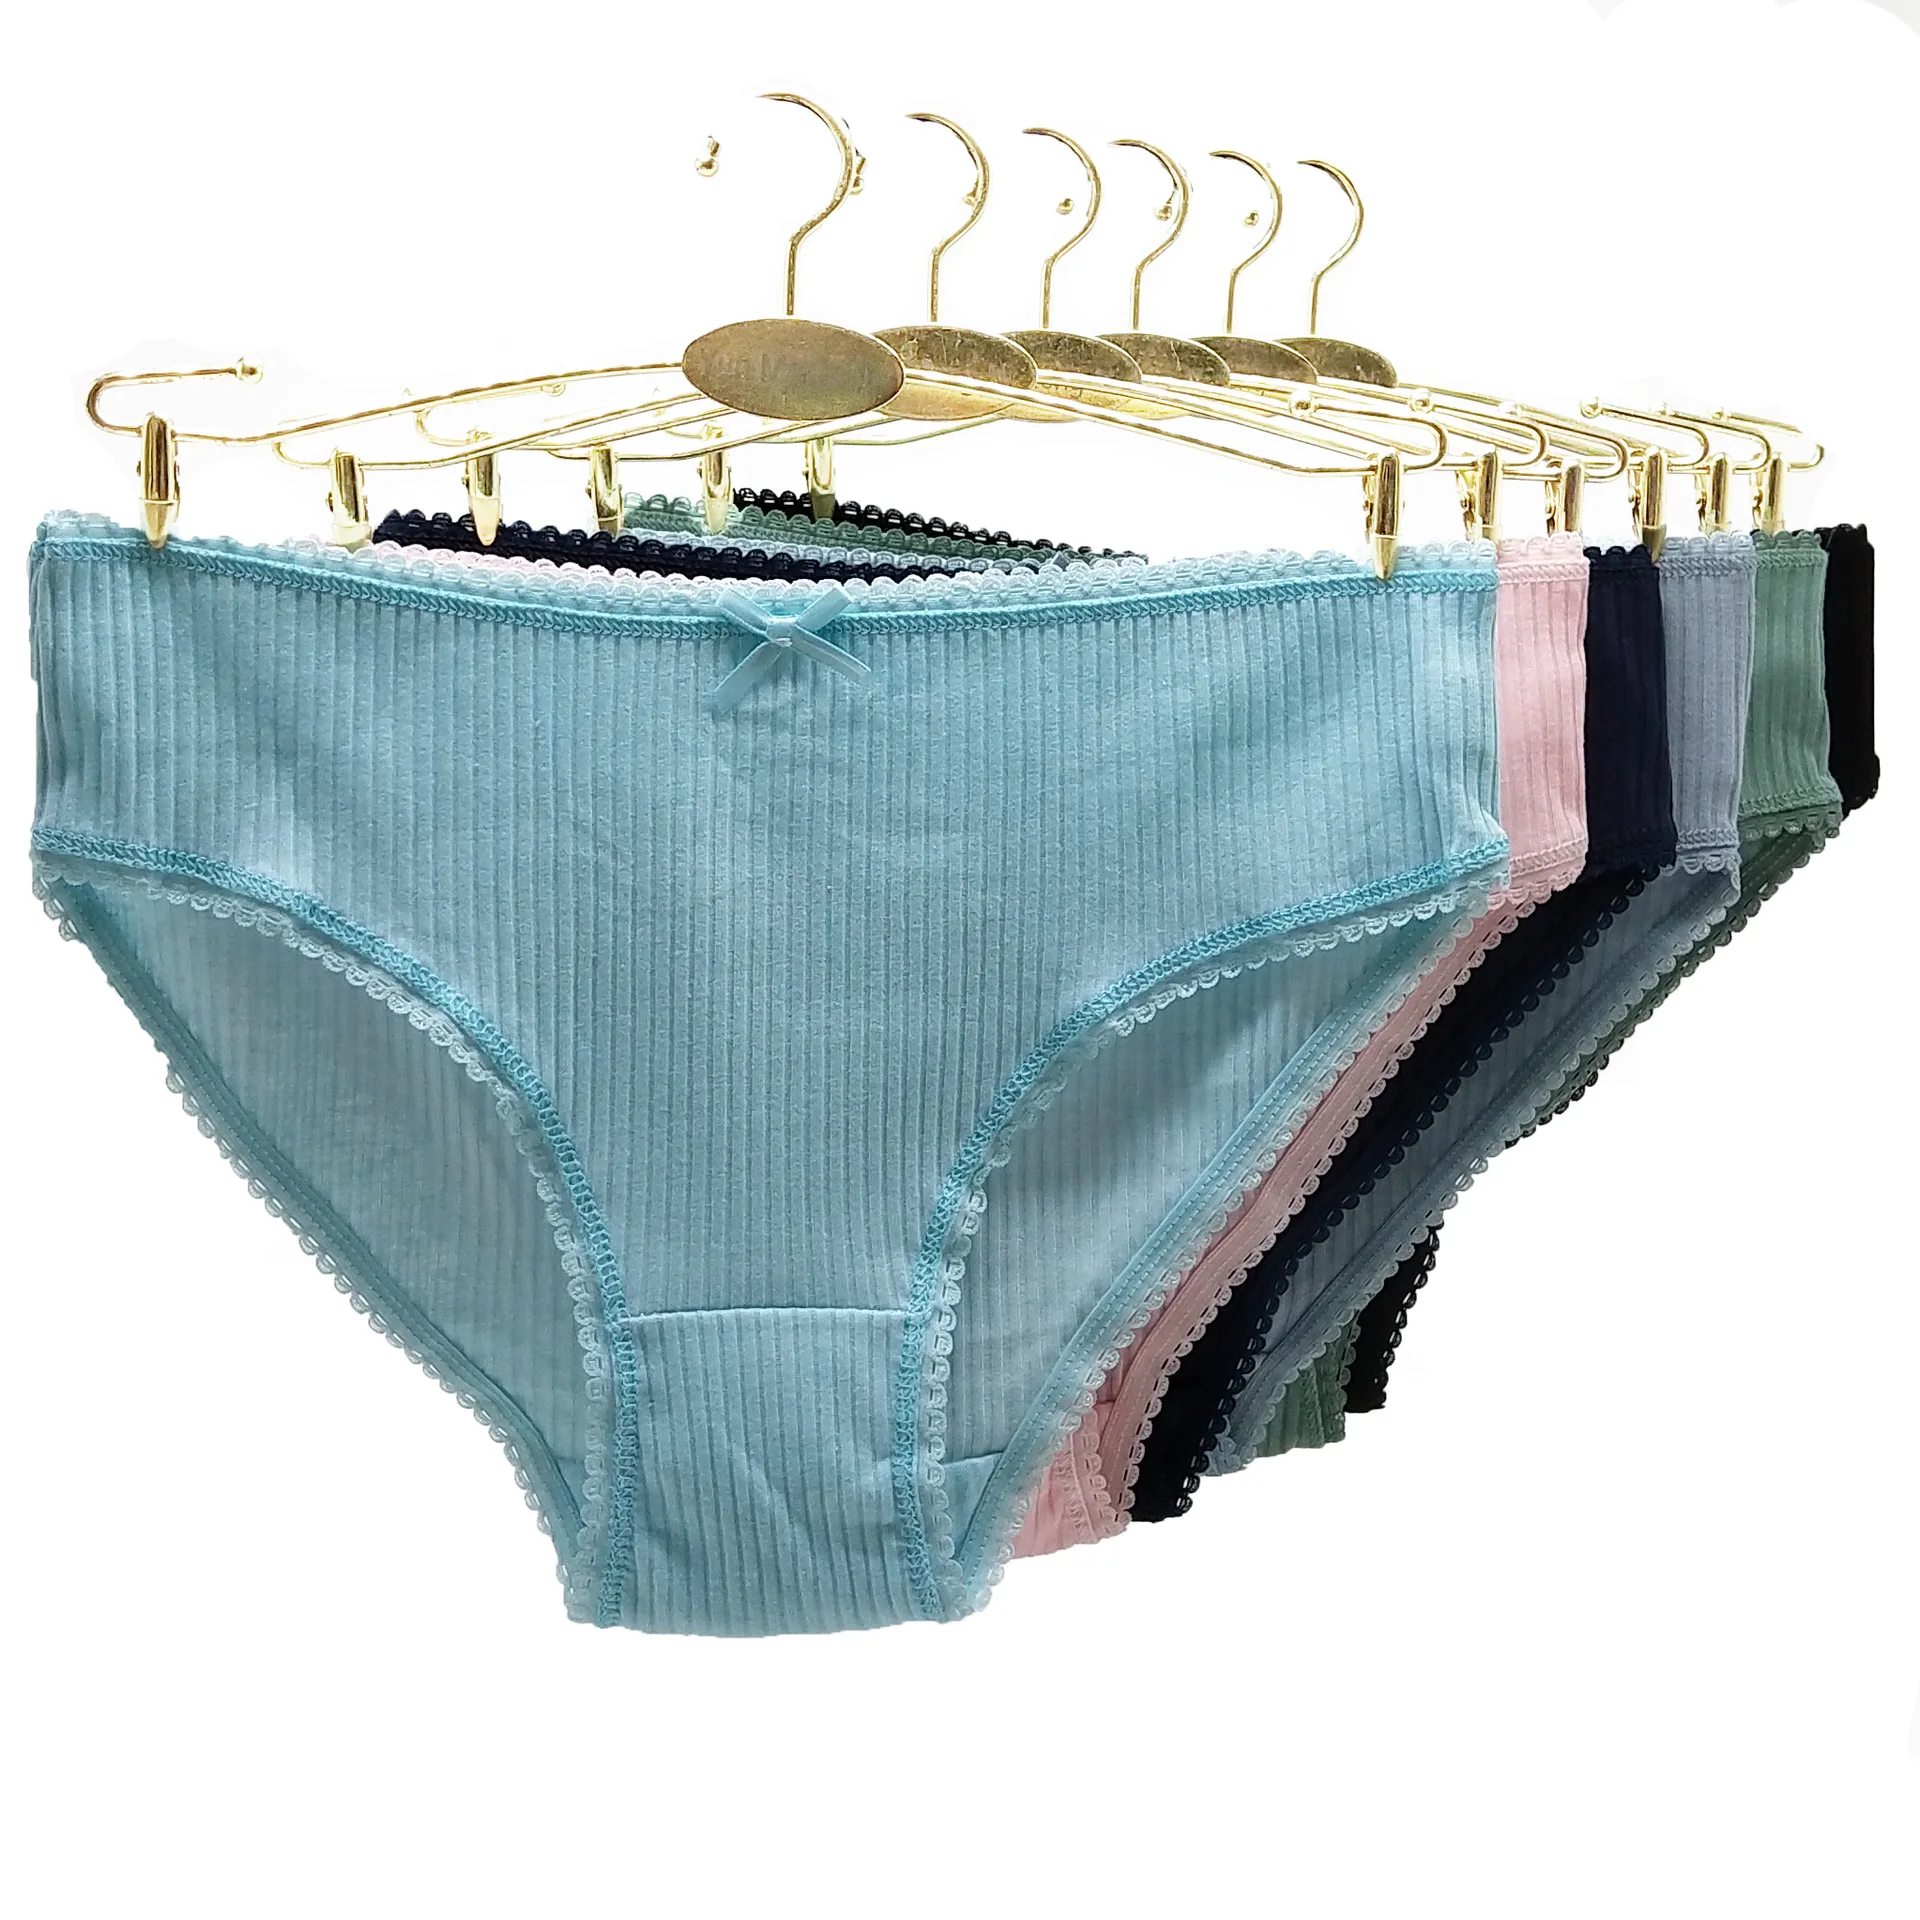 Women Underwear Sexy Lingerie Cotton Panties